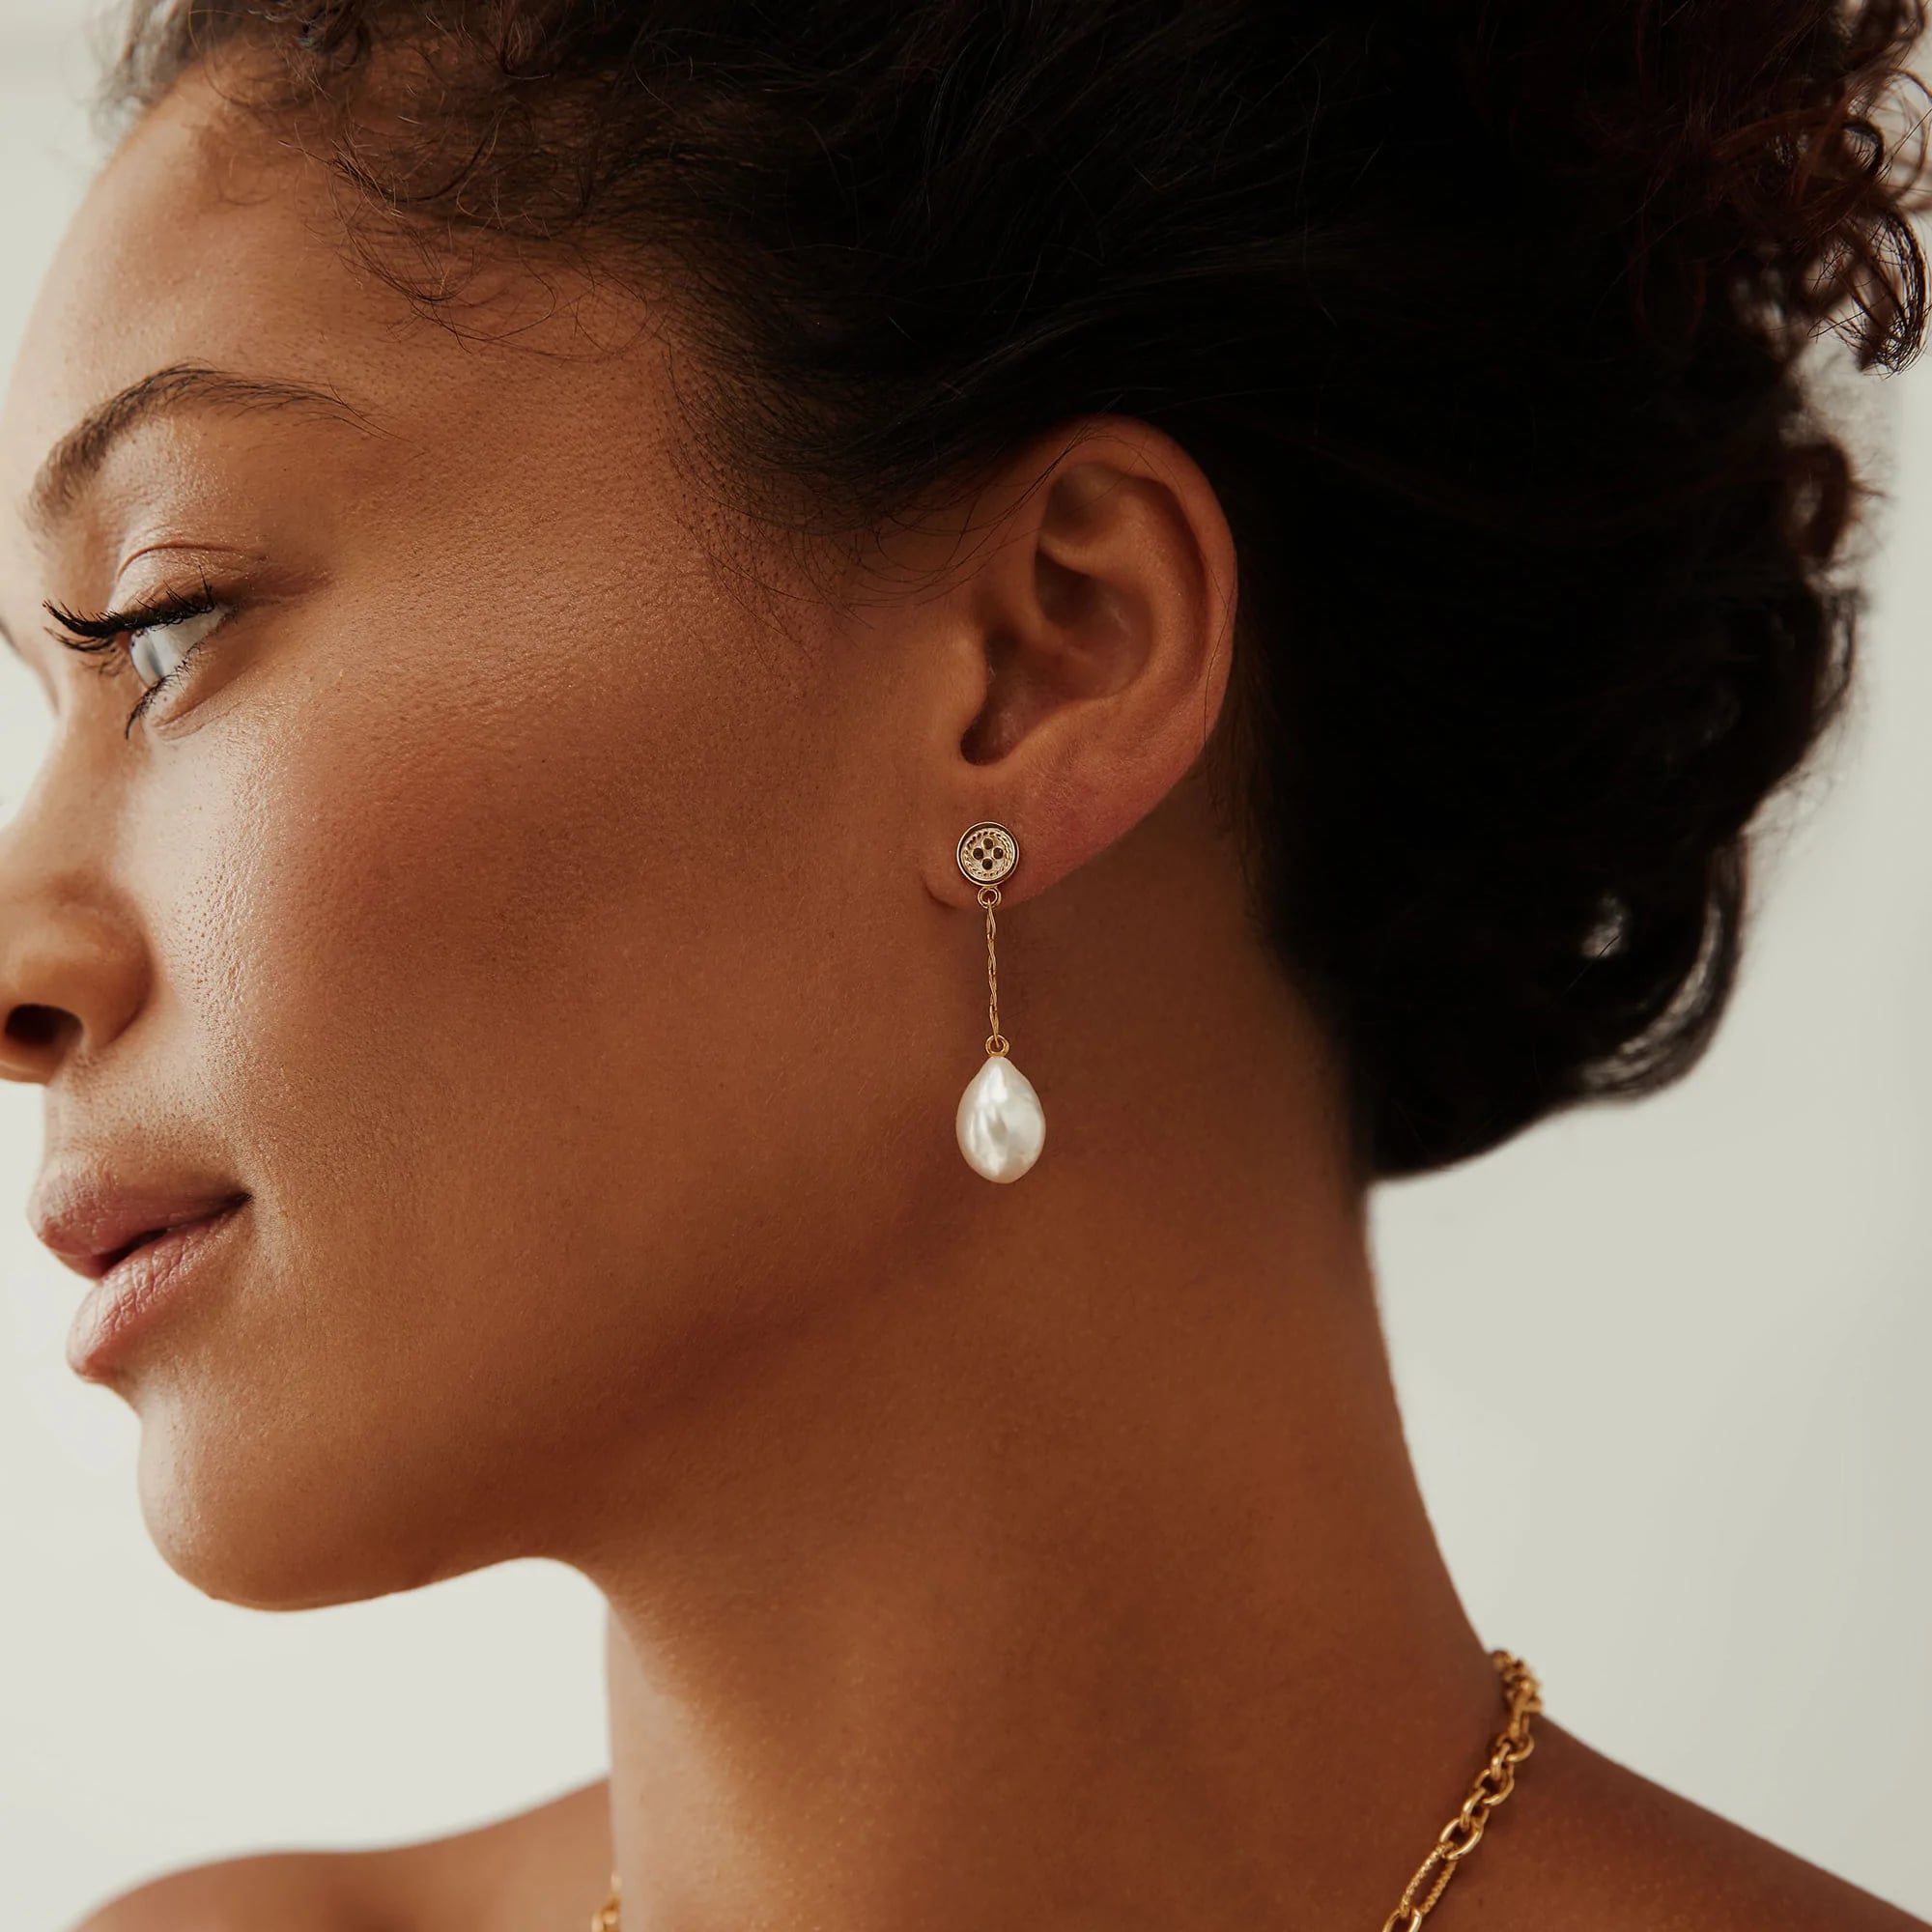 Buy Golden Clover Dangle Earrings for Women Online in India